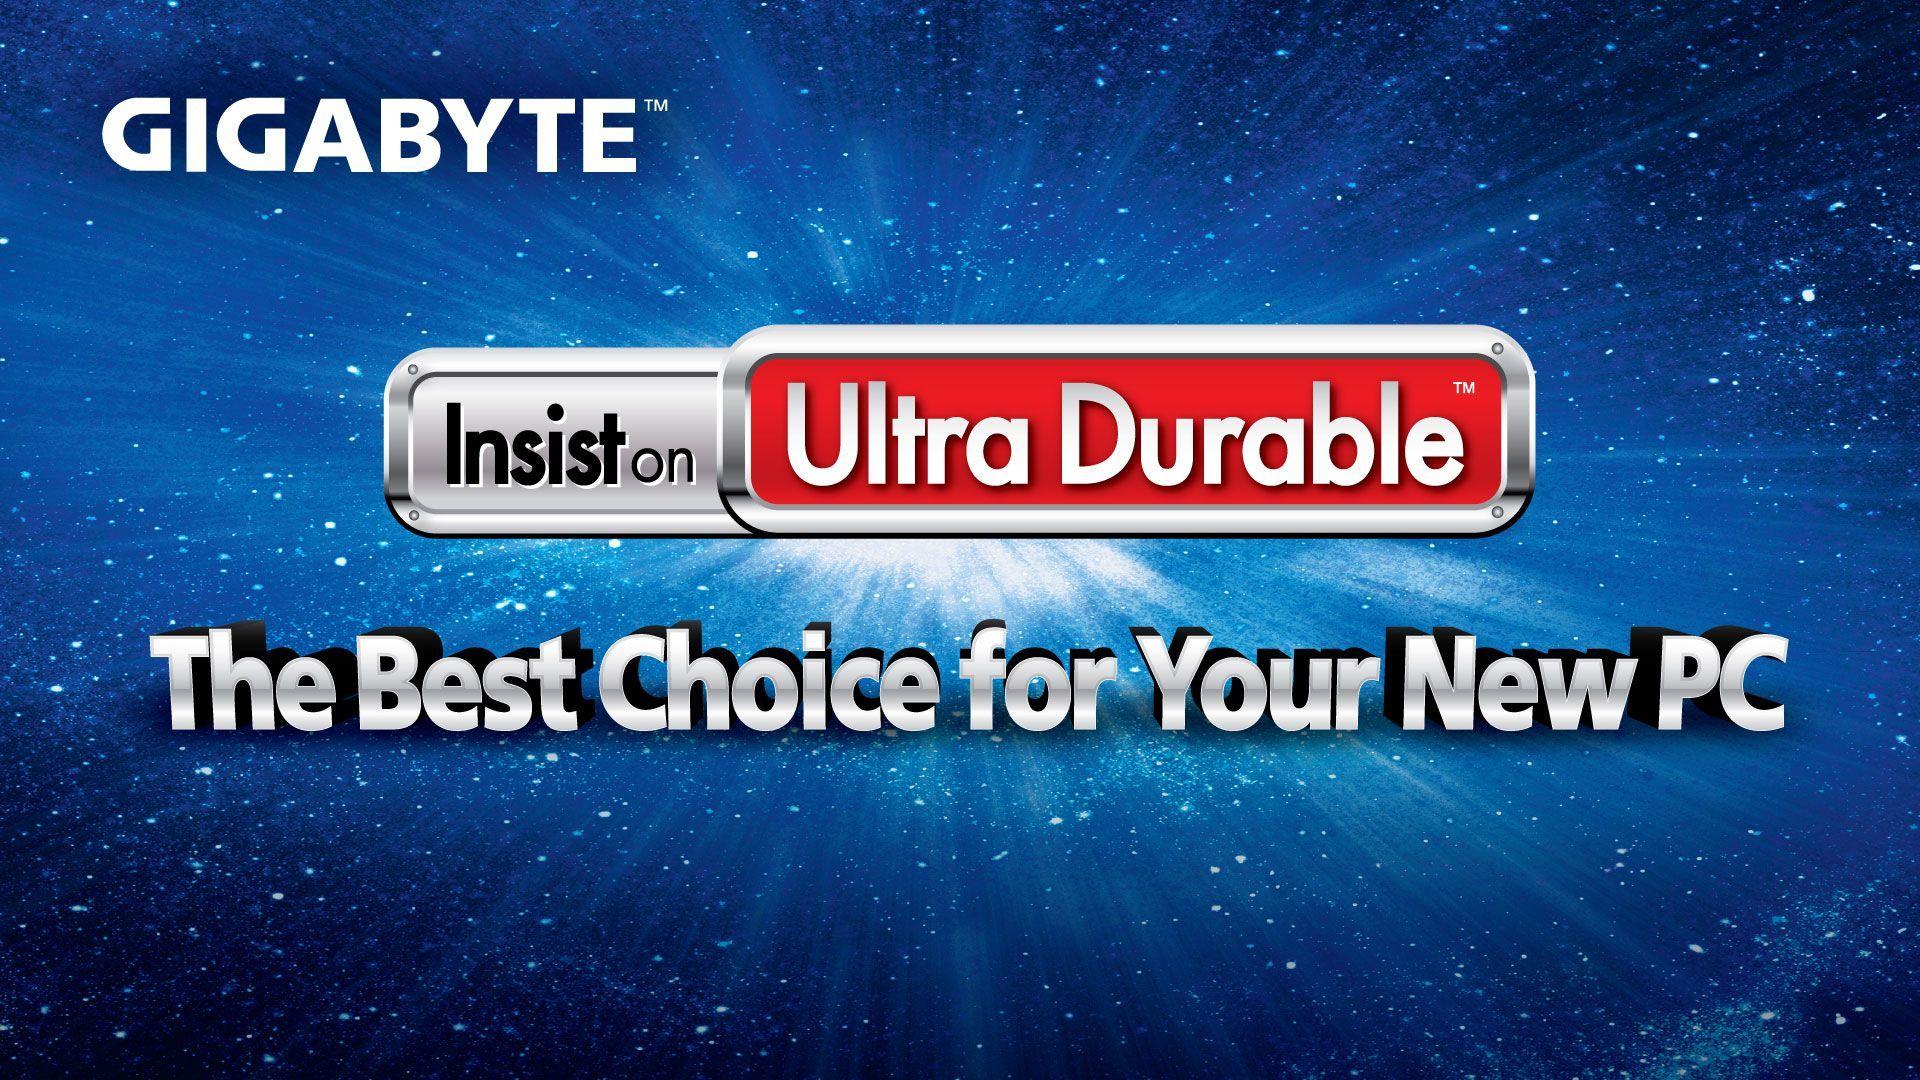 6 gigabyte ultra durable motherboard